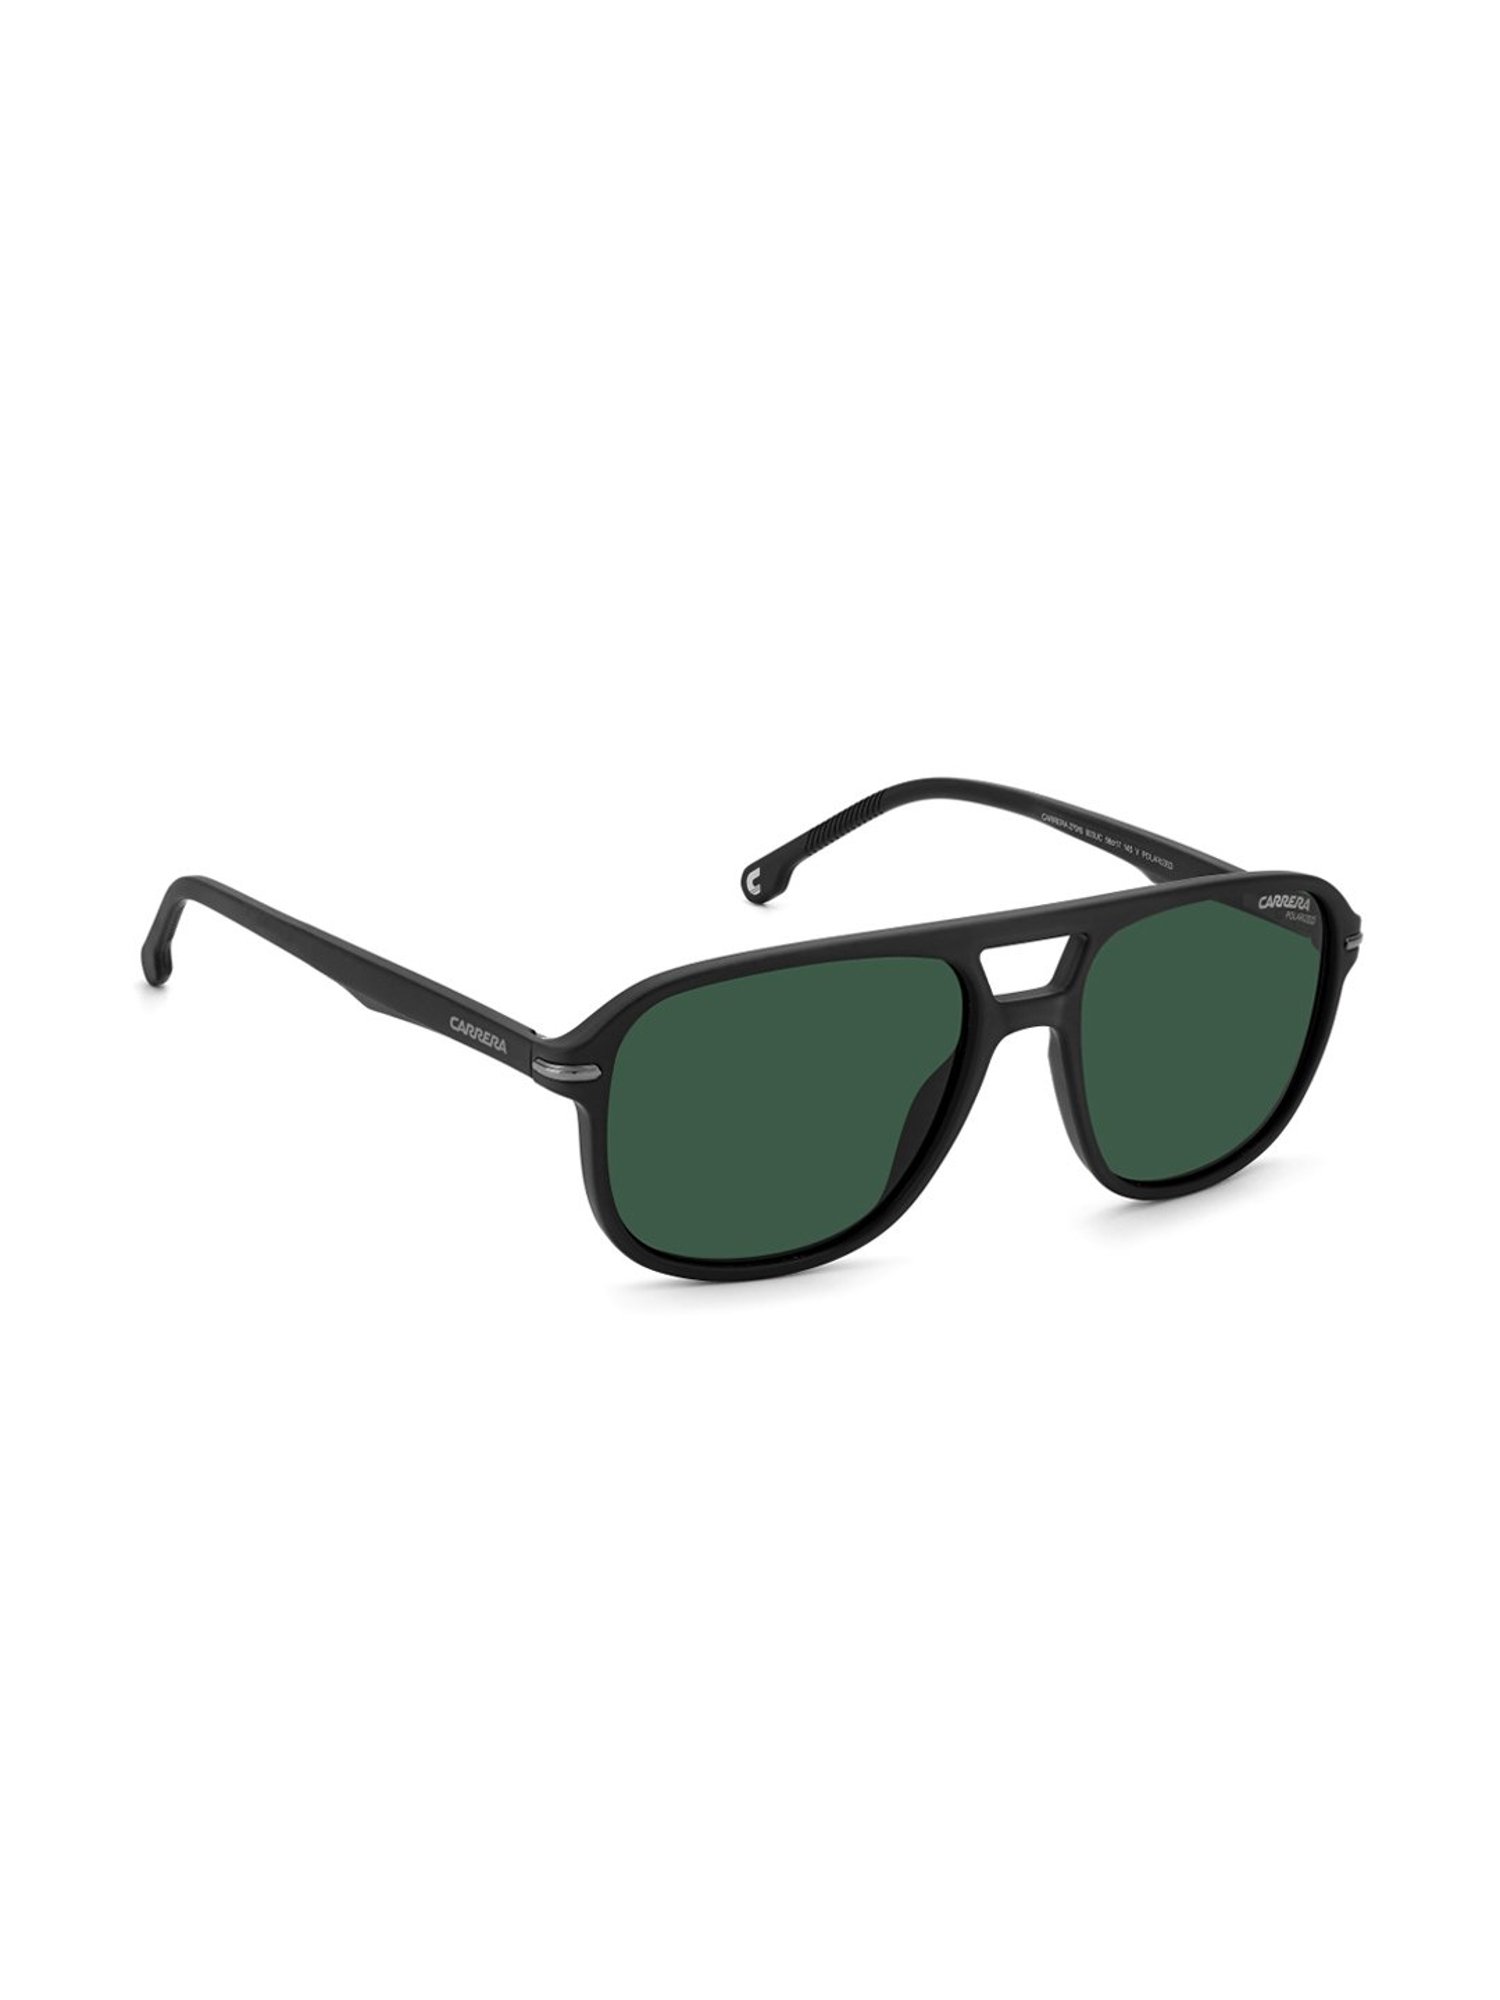 Gold Frame Classic Maverick Aviator Sunglasses from Aviator-Sunglasses | Aviator  sunglasses style, Aviator sunglasses, Classic frame